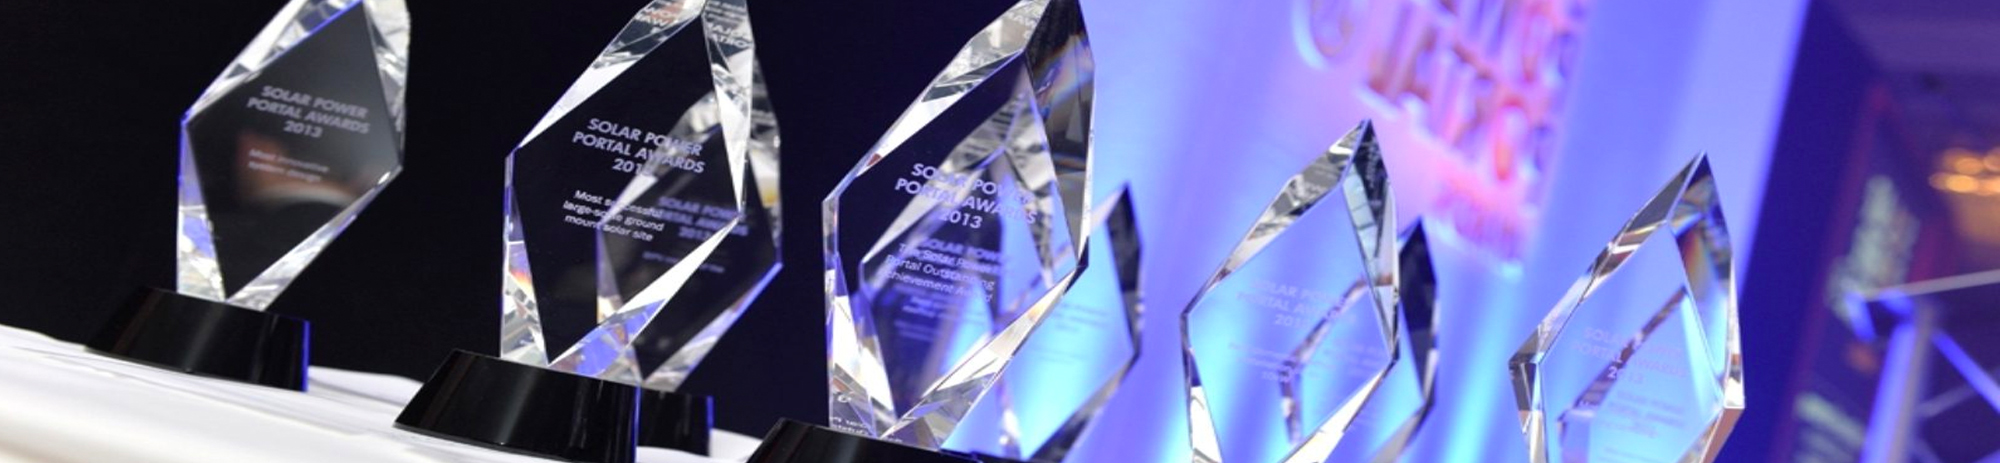 Row of glass awards